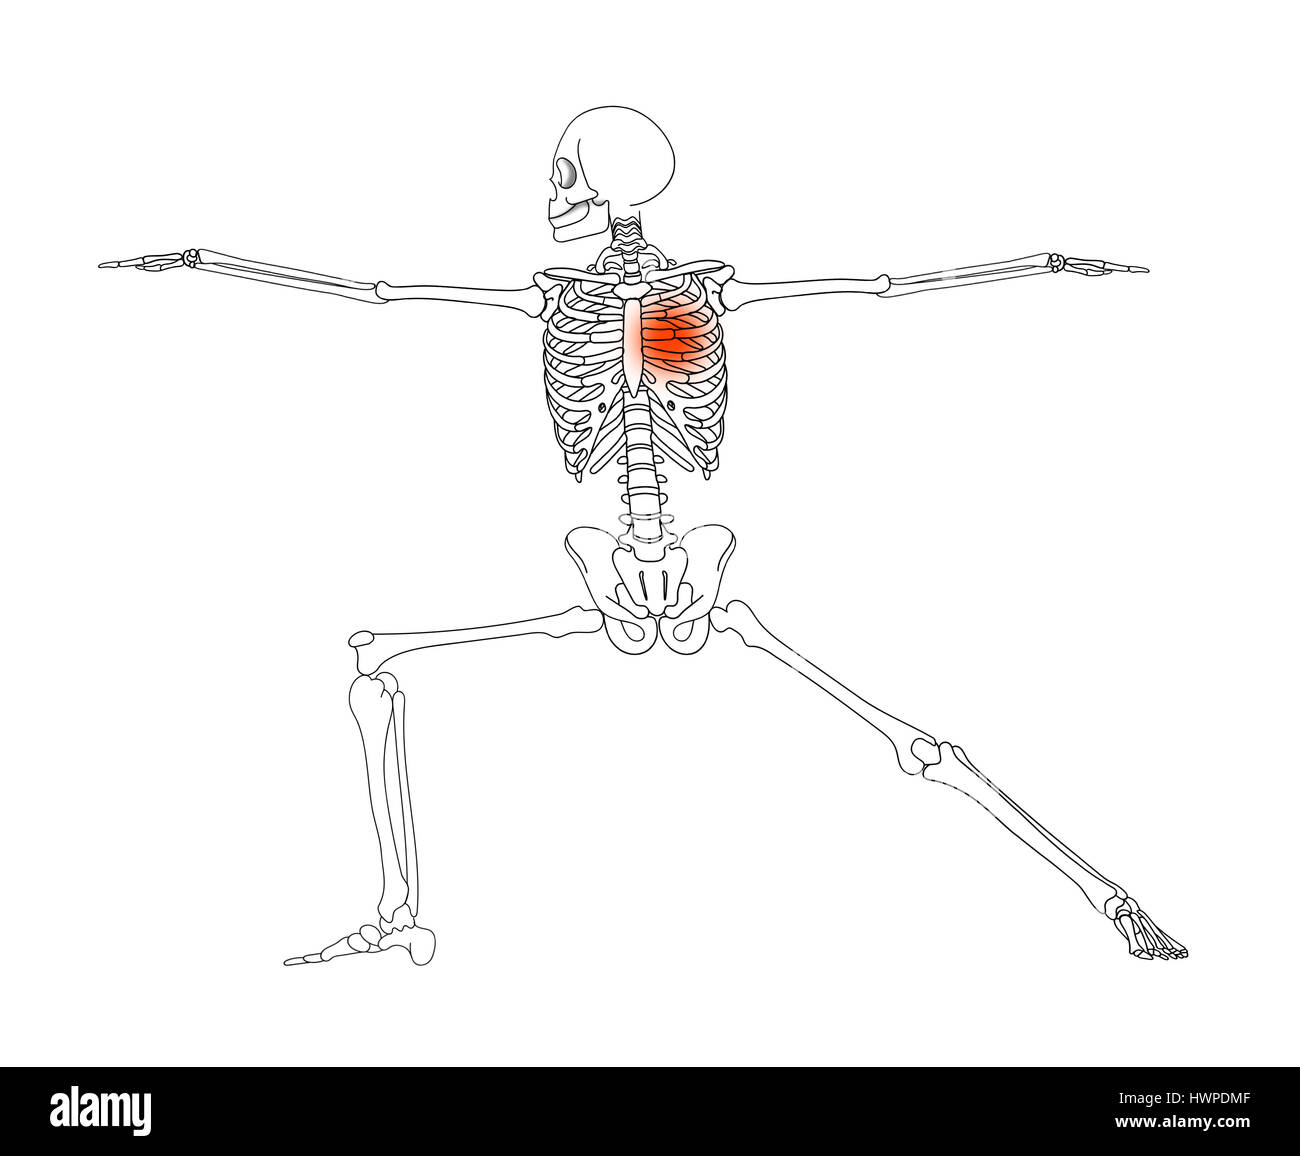 Body Art Painting Helloween Female Skeleton Stock Photo by ©fyb@tula.ru  310617682